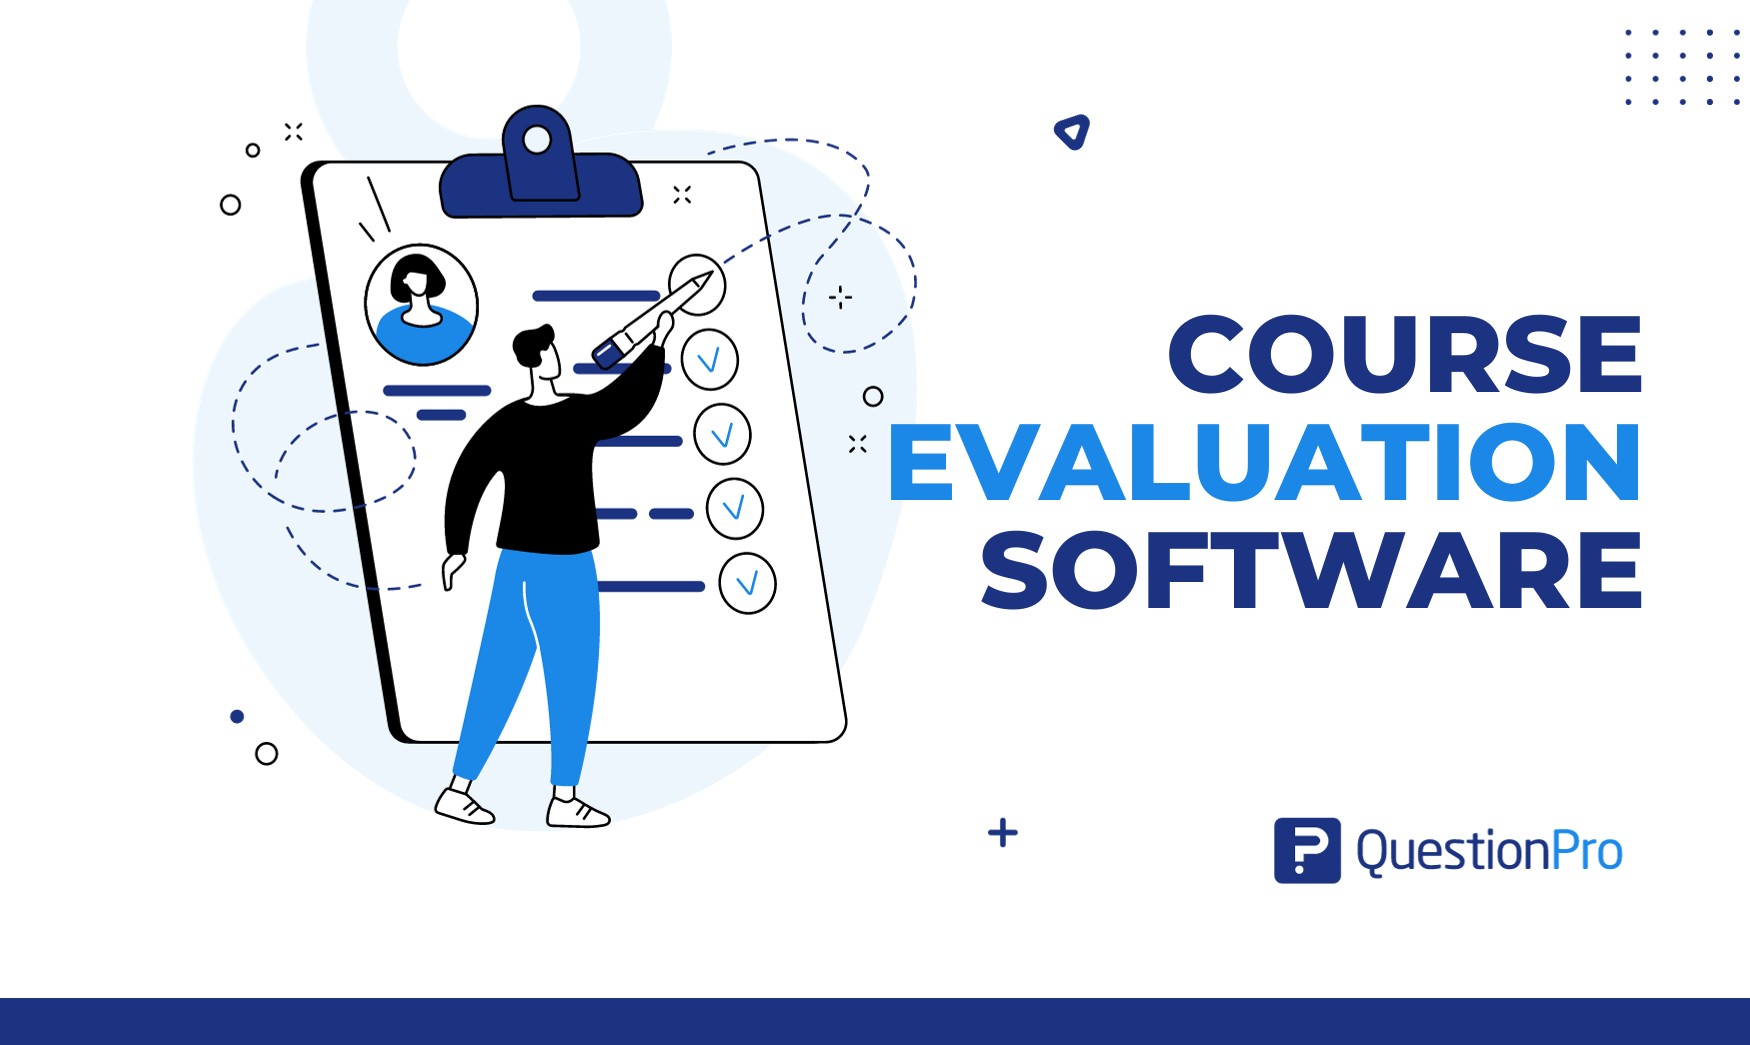 Course evaluation software